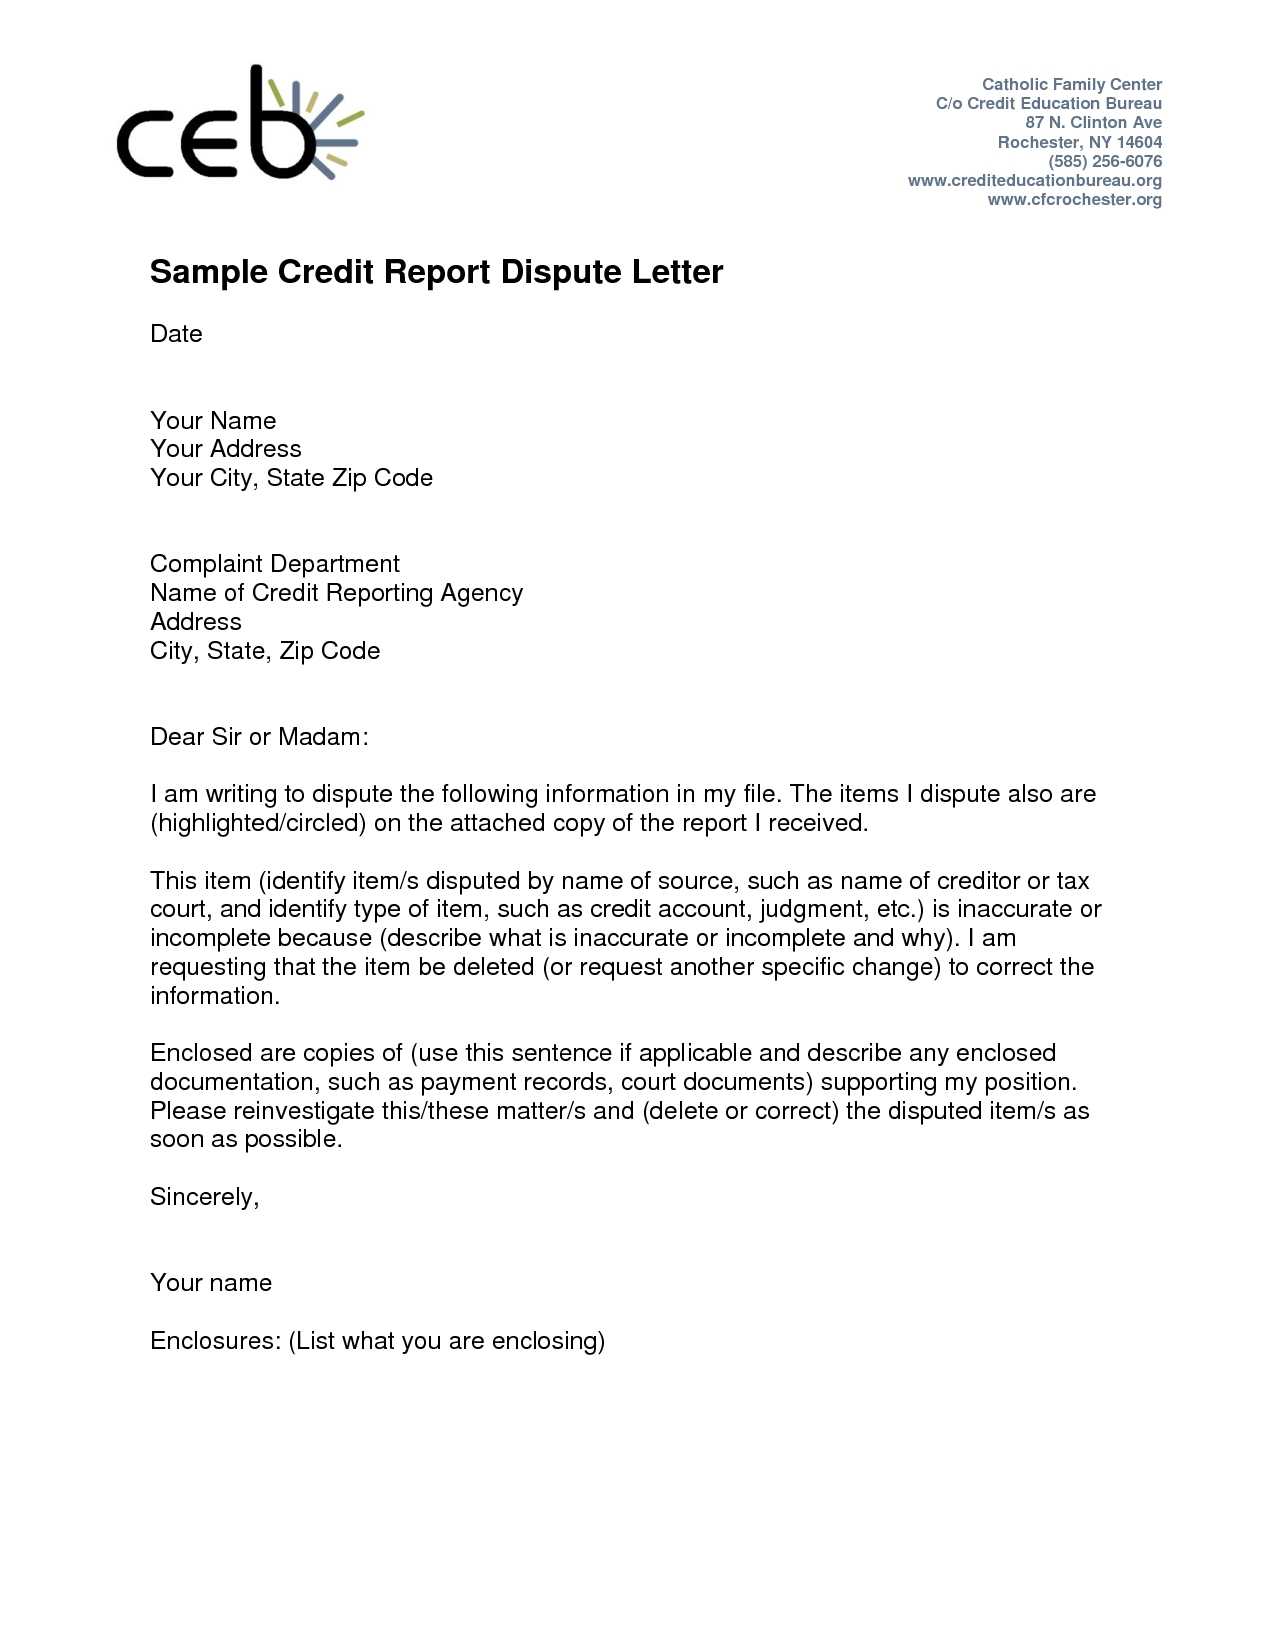 Report Examples Credit Dispute Letter Templates Acurnamedia With Credit Report Dispute Letter Template